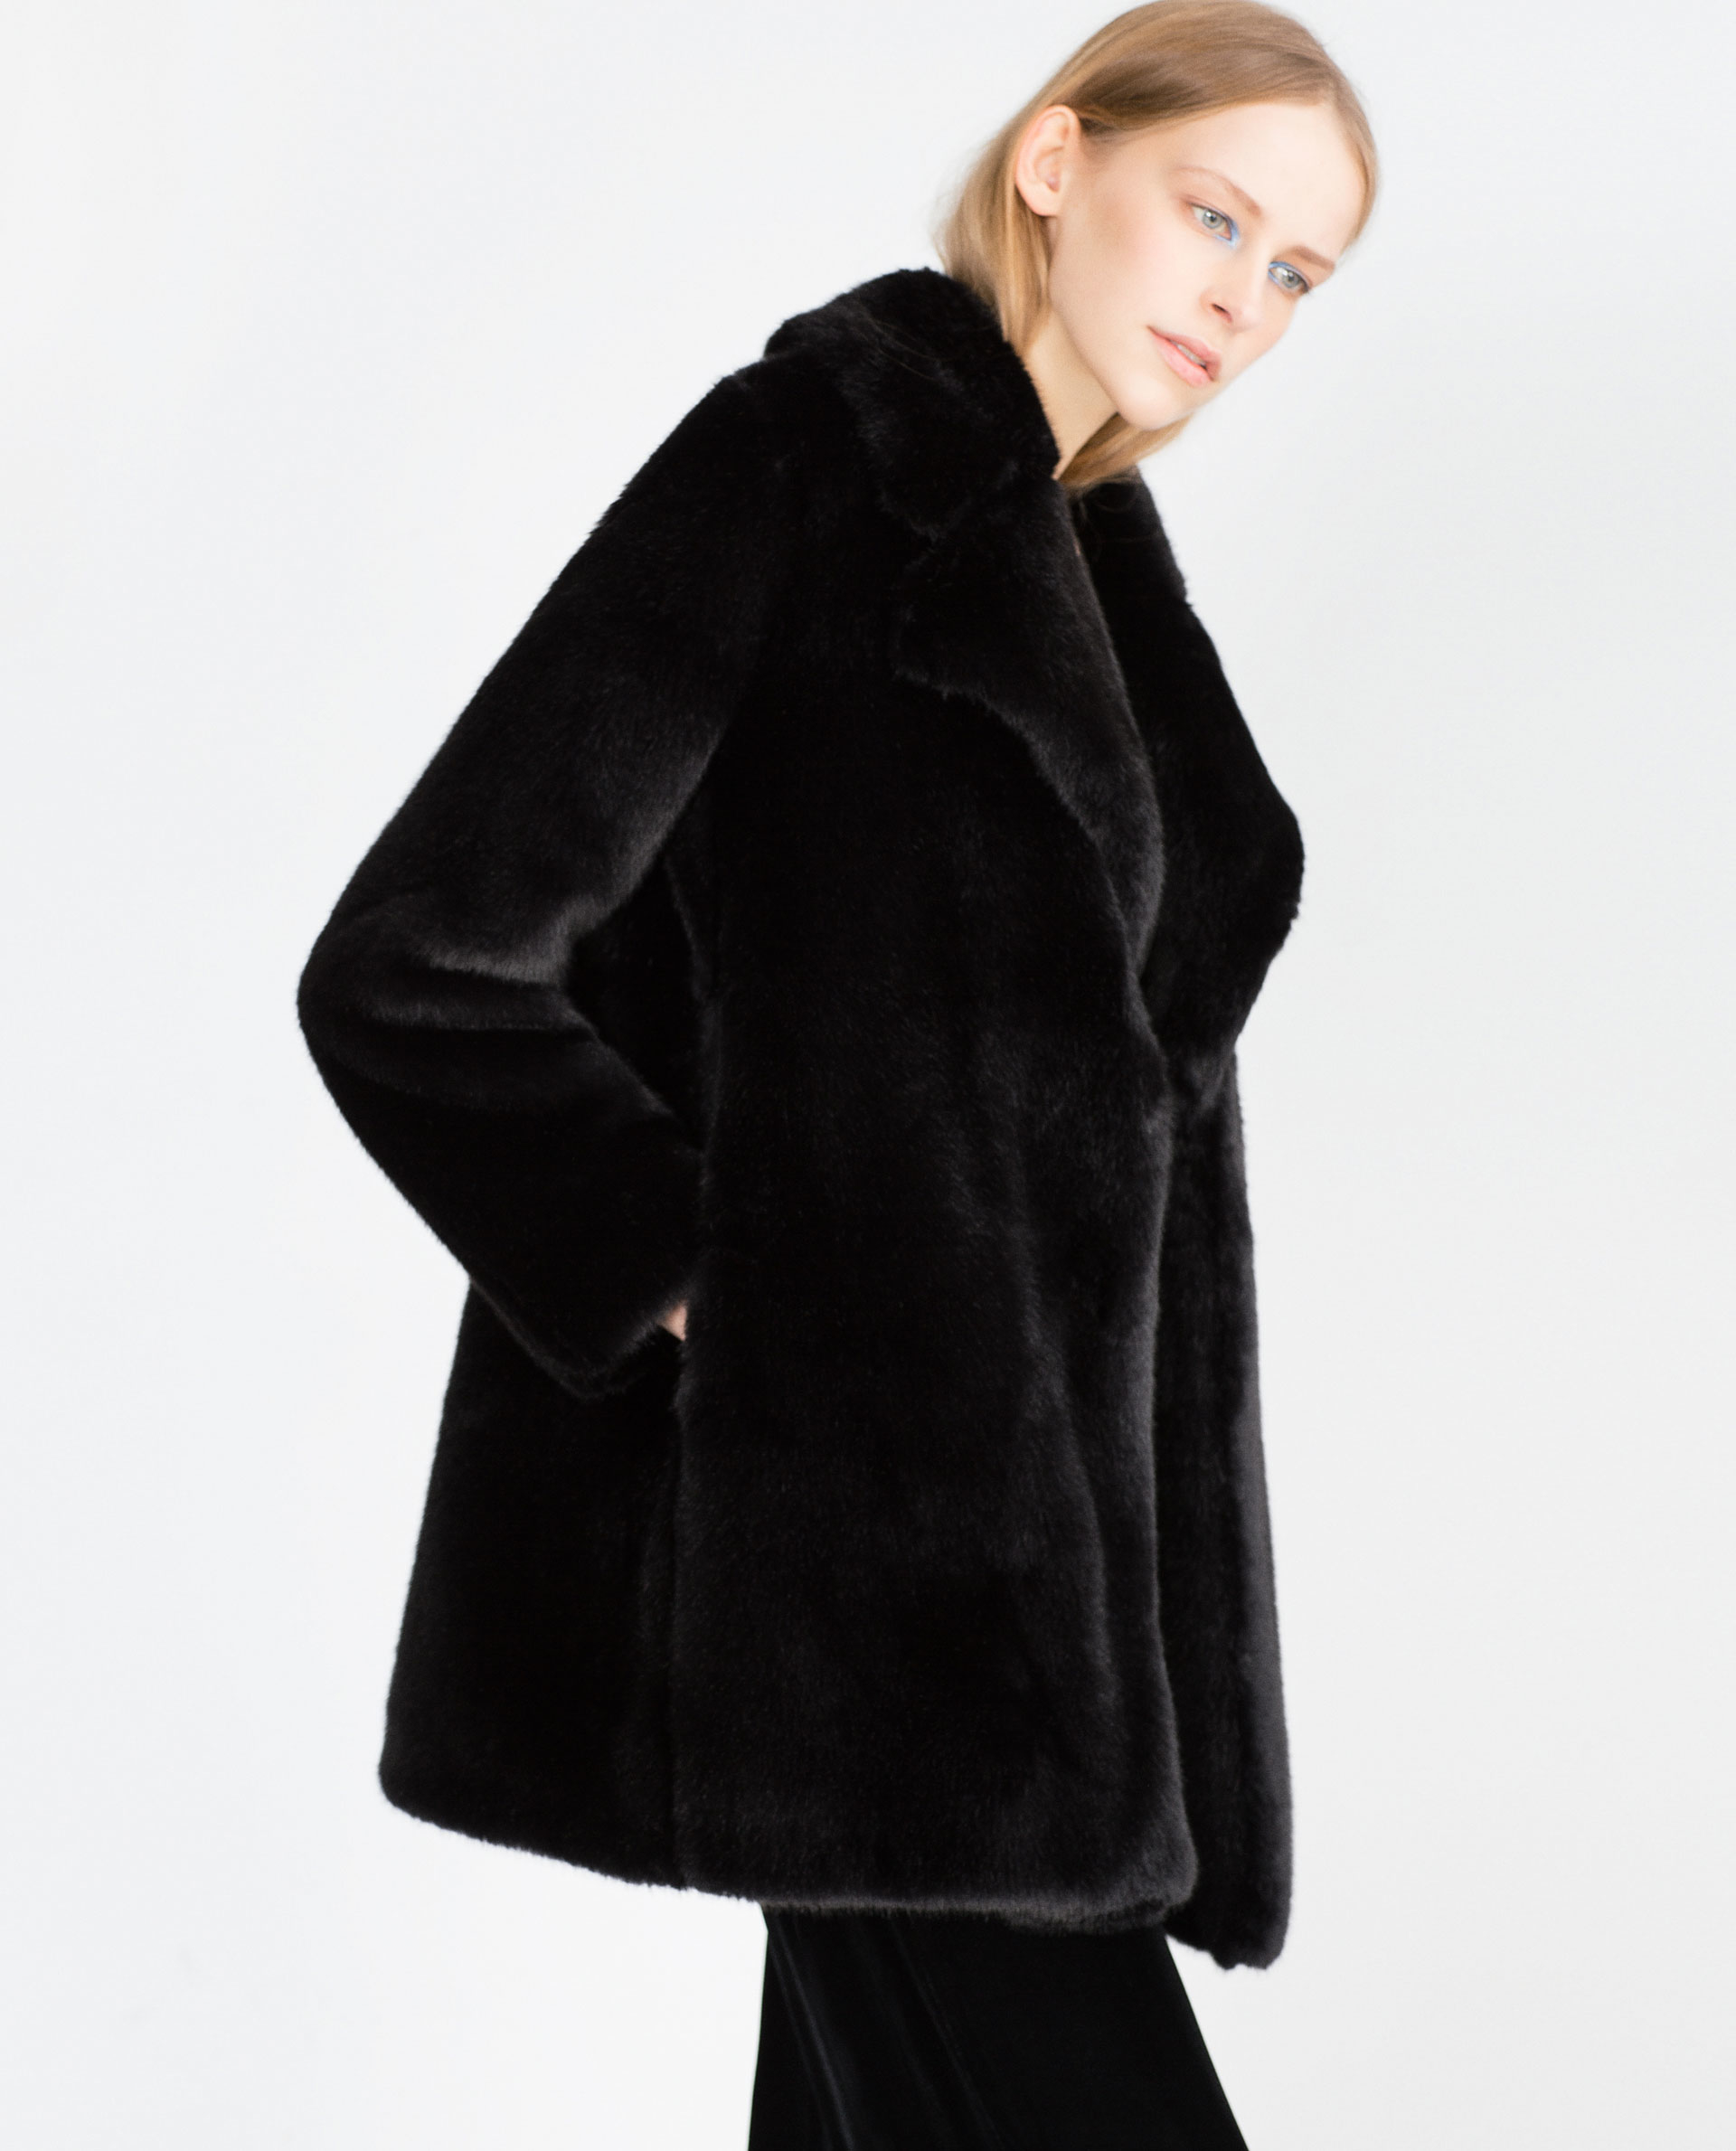 Black Coat With Fur Hood Zara - Image 2 Of Overcoat With Faux Fur Hood ...